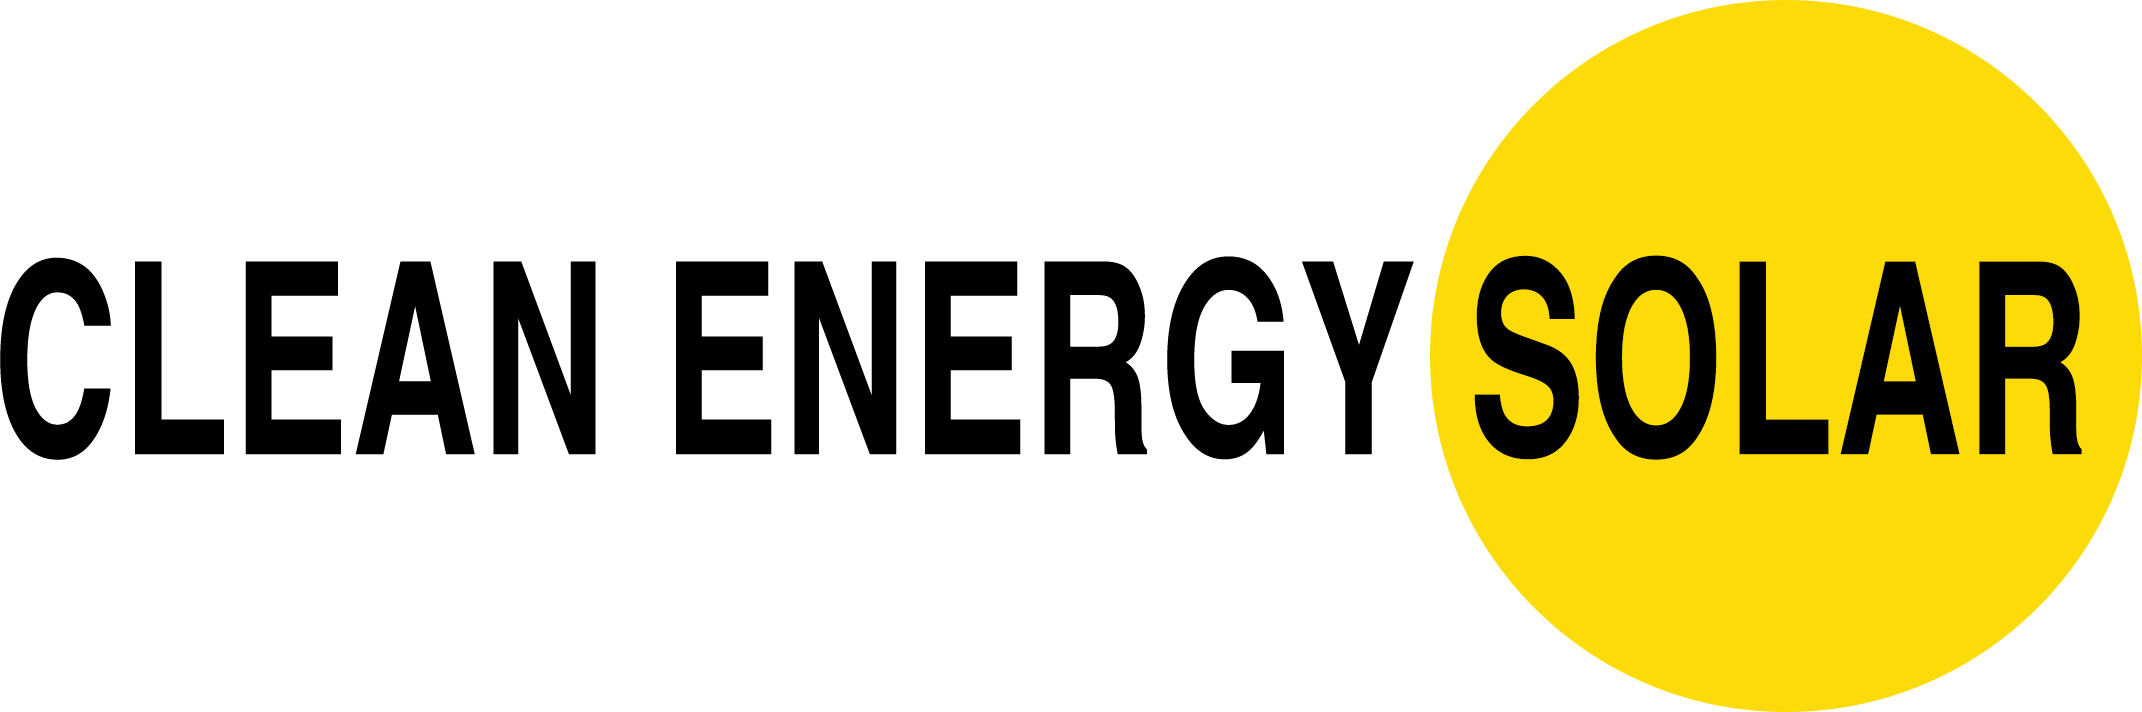 clean-energy-solar-logo2.png